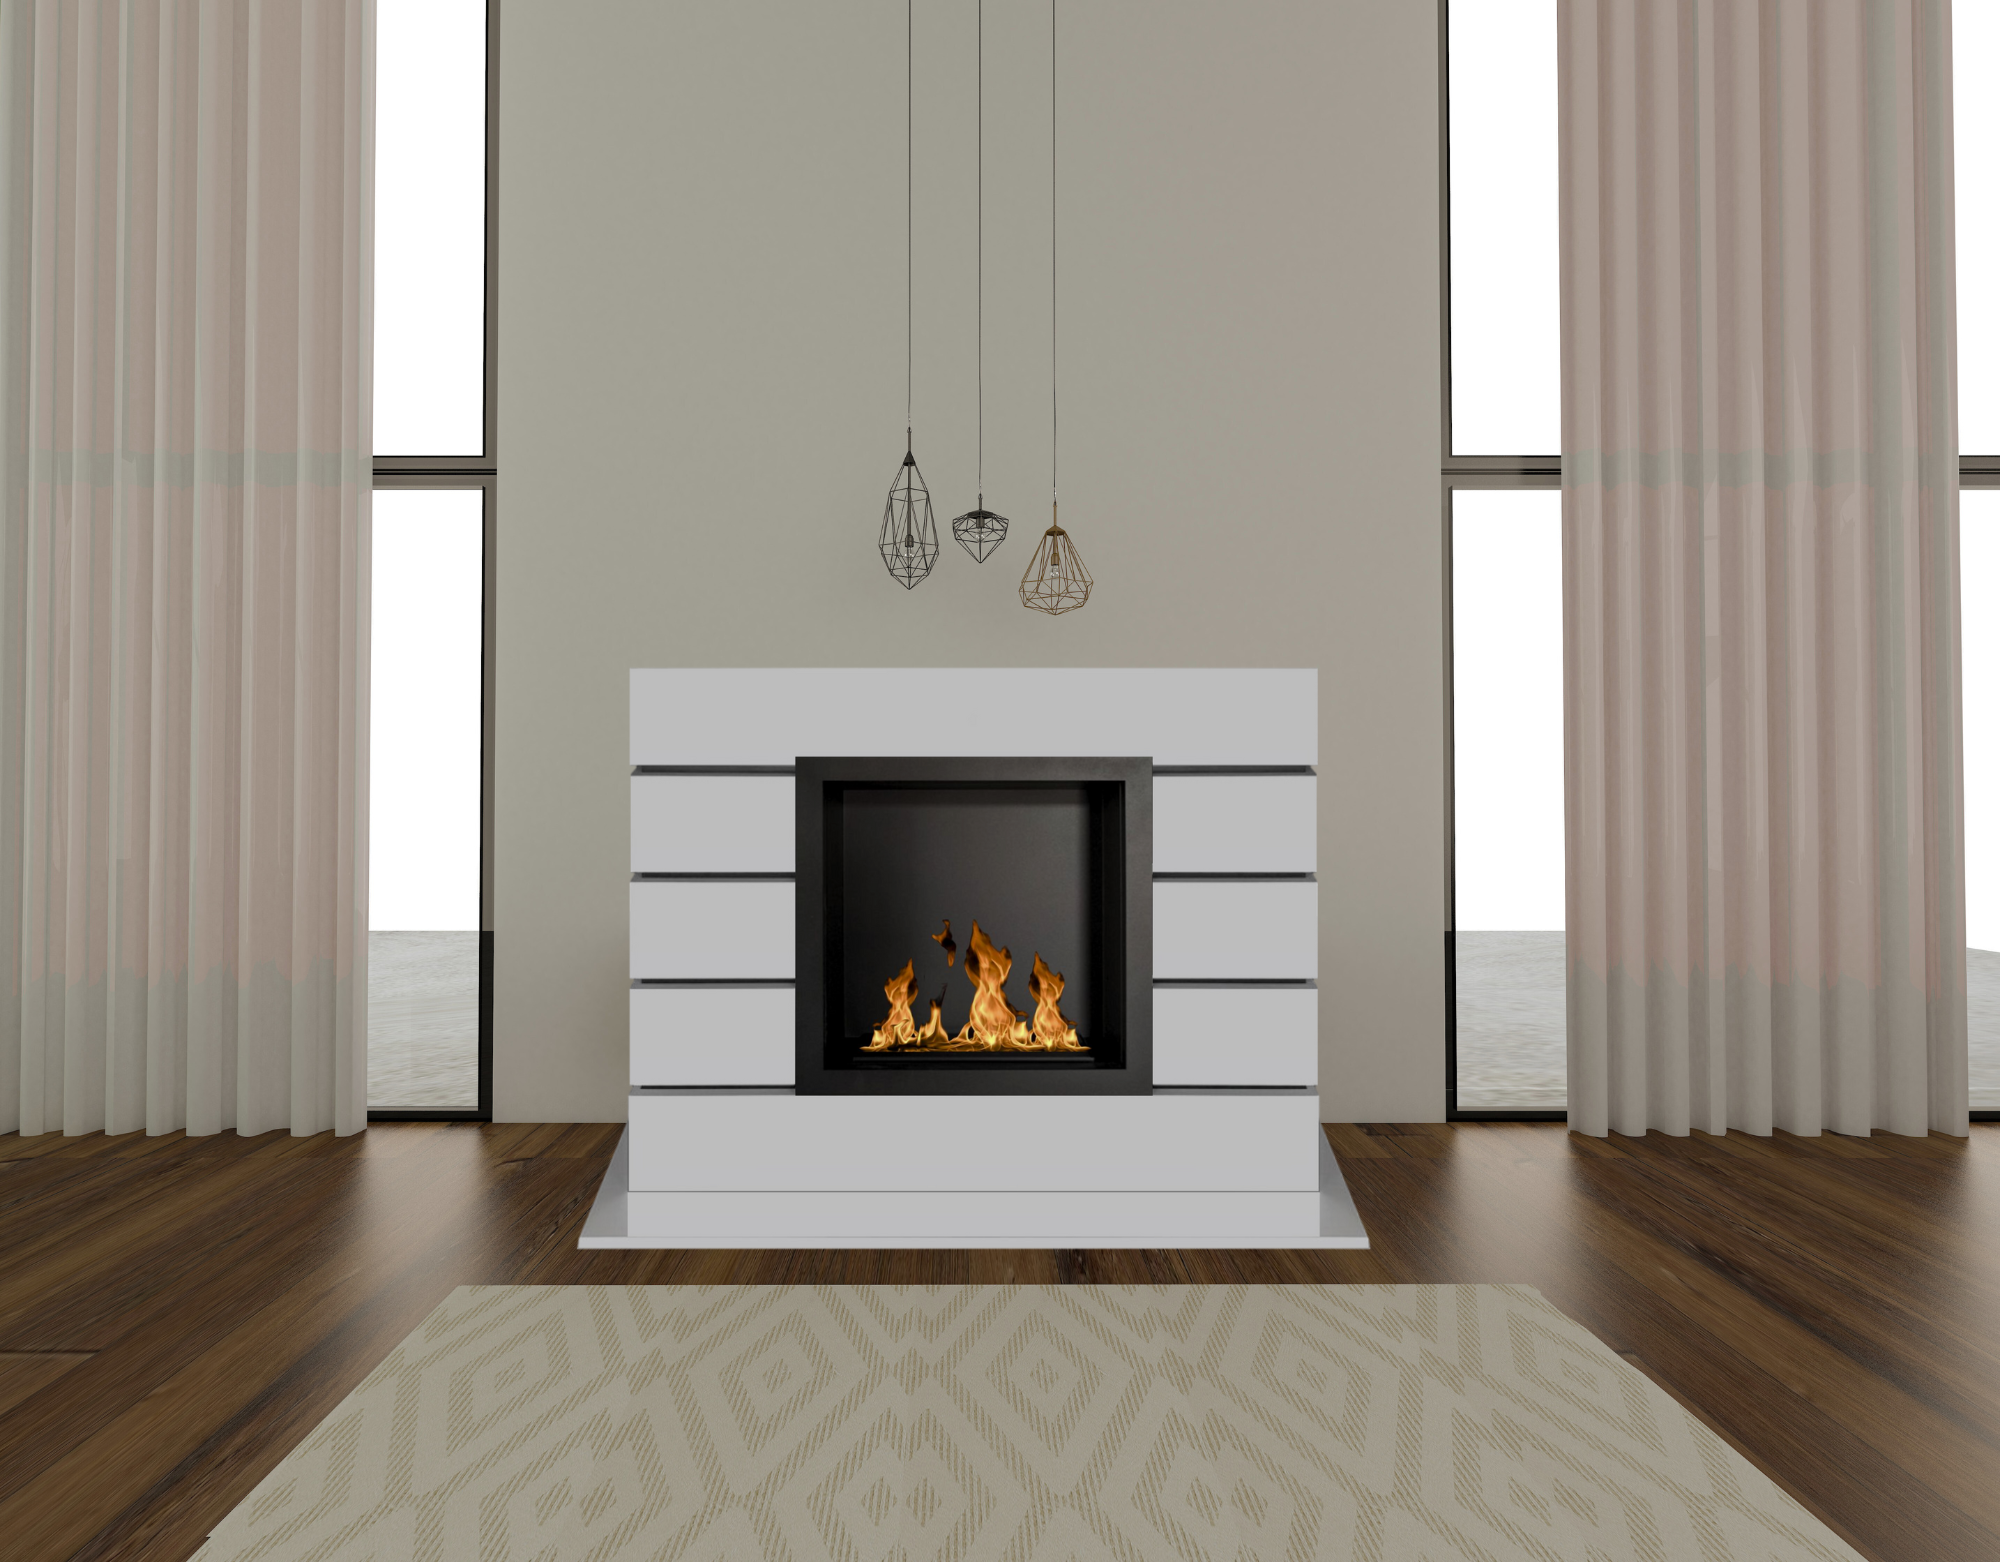 Antique Art Design Bio Fireplace With Chimney 130 CM